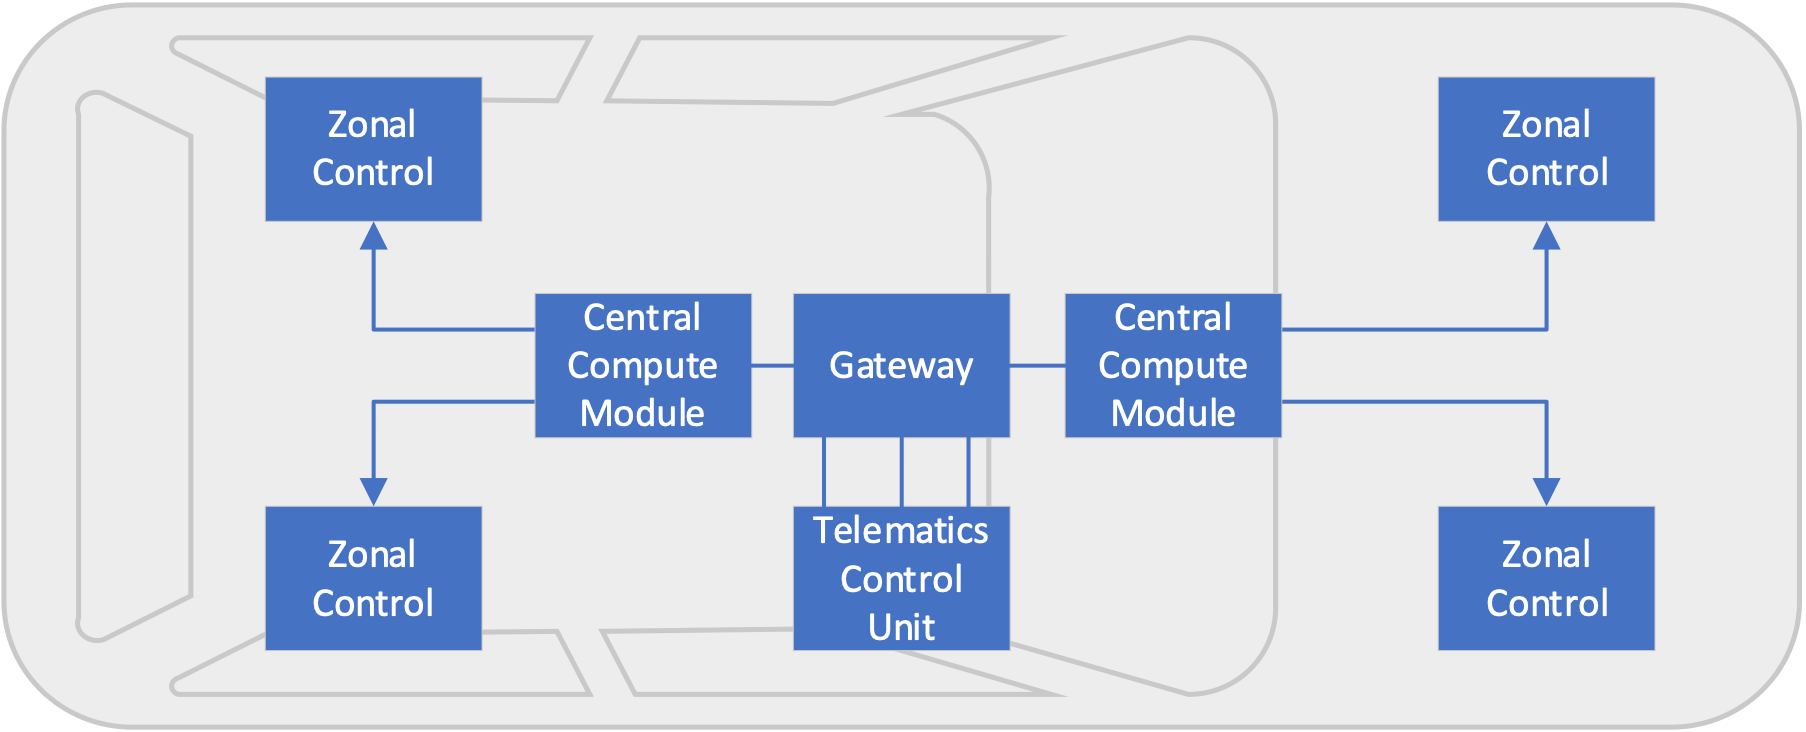 zonal-control-architecture